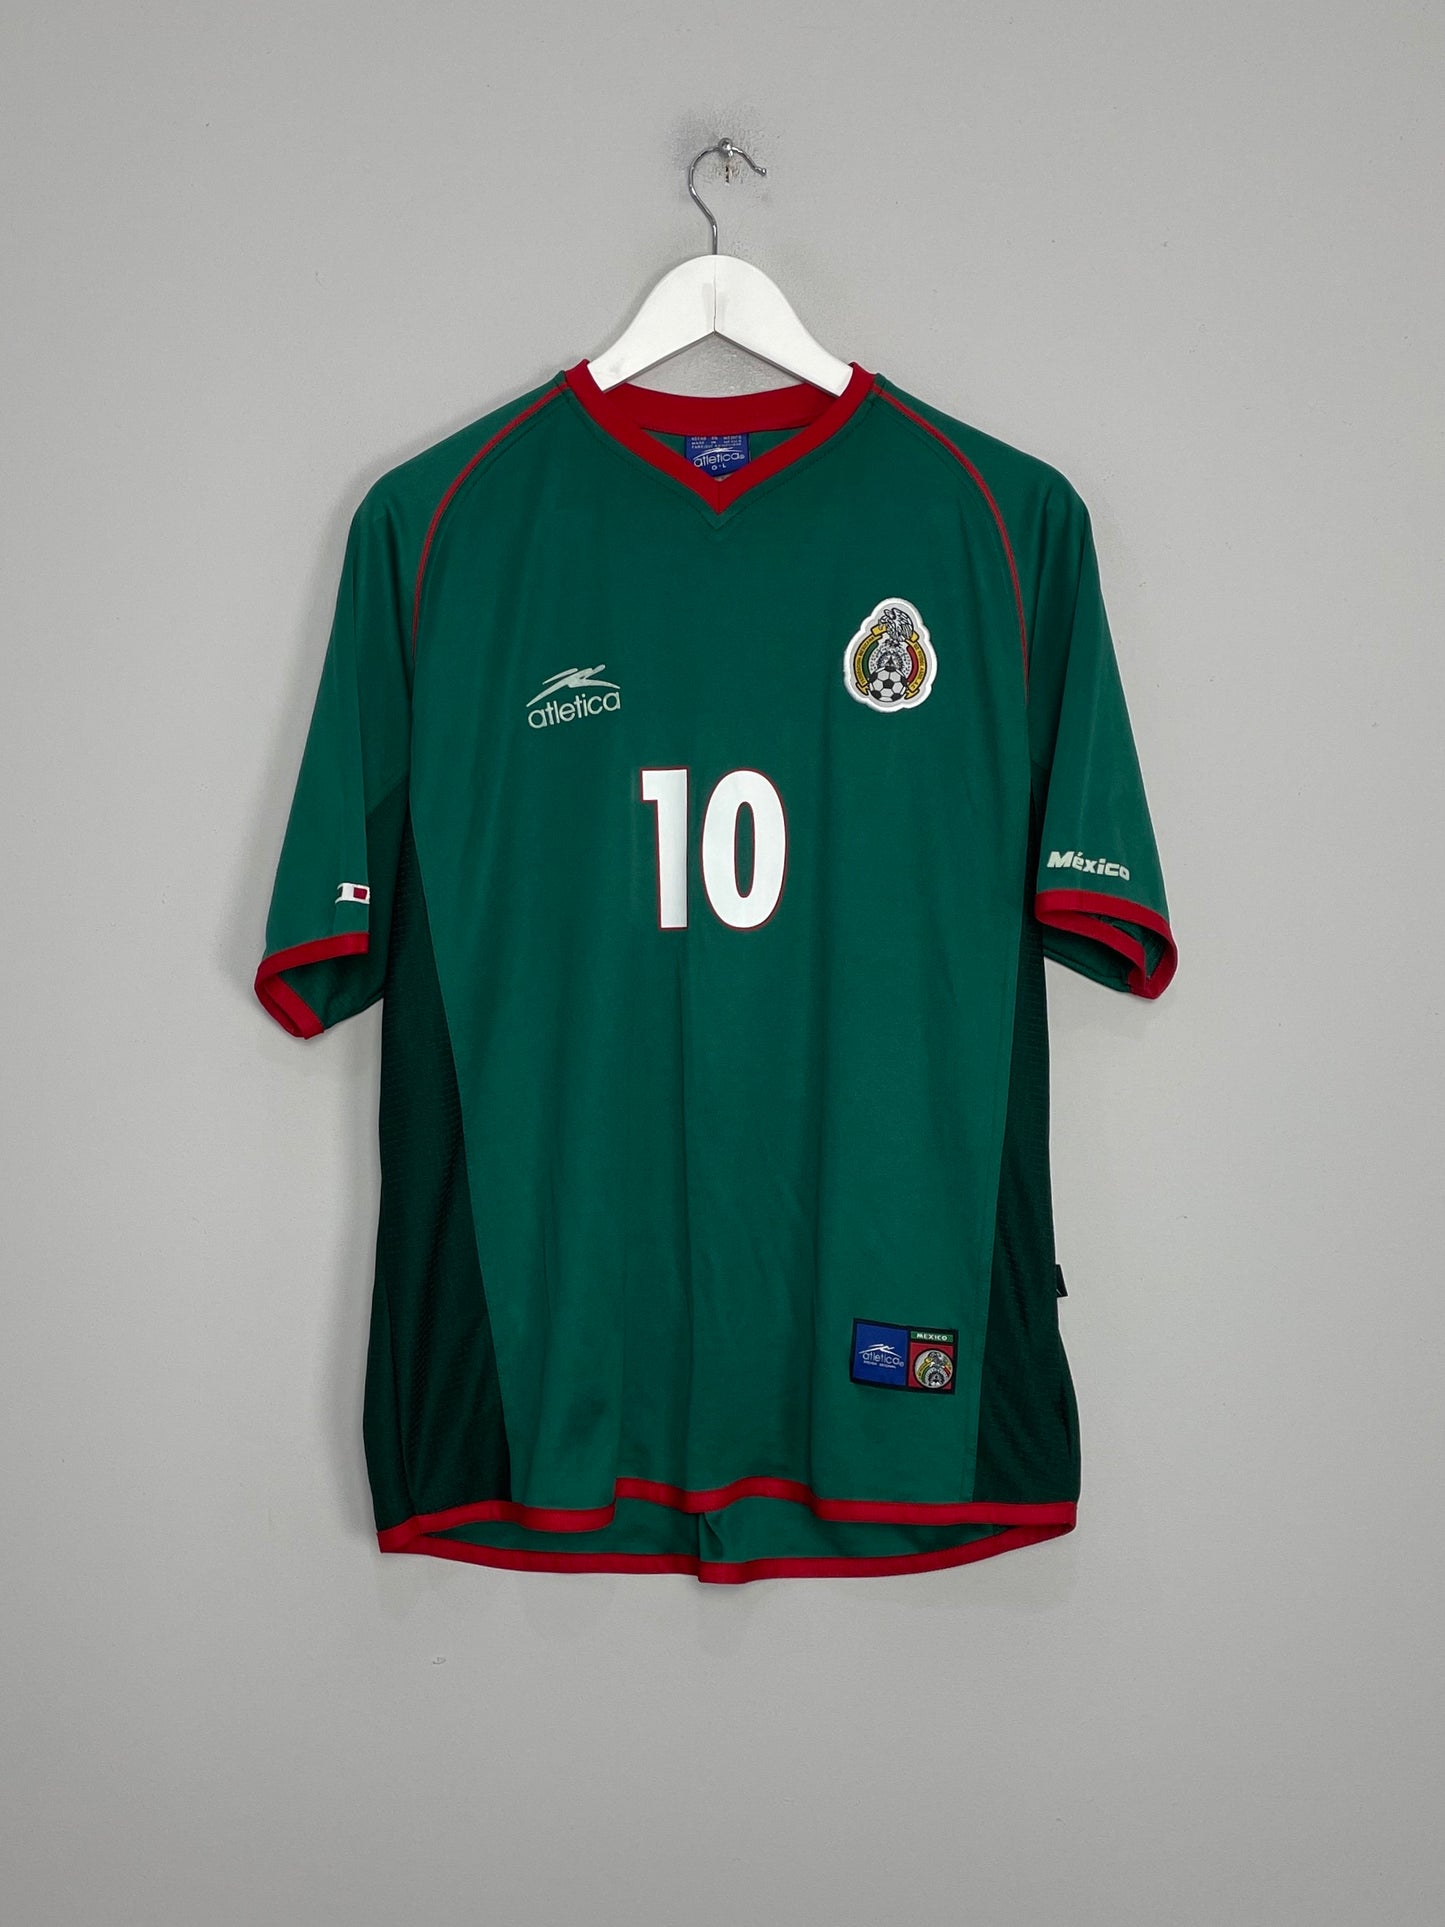 2002/03 MEXICO BLANCO #10 HOME SHIRT (L) ATLETICA